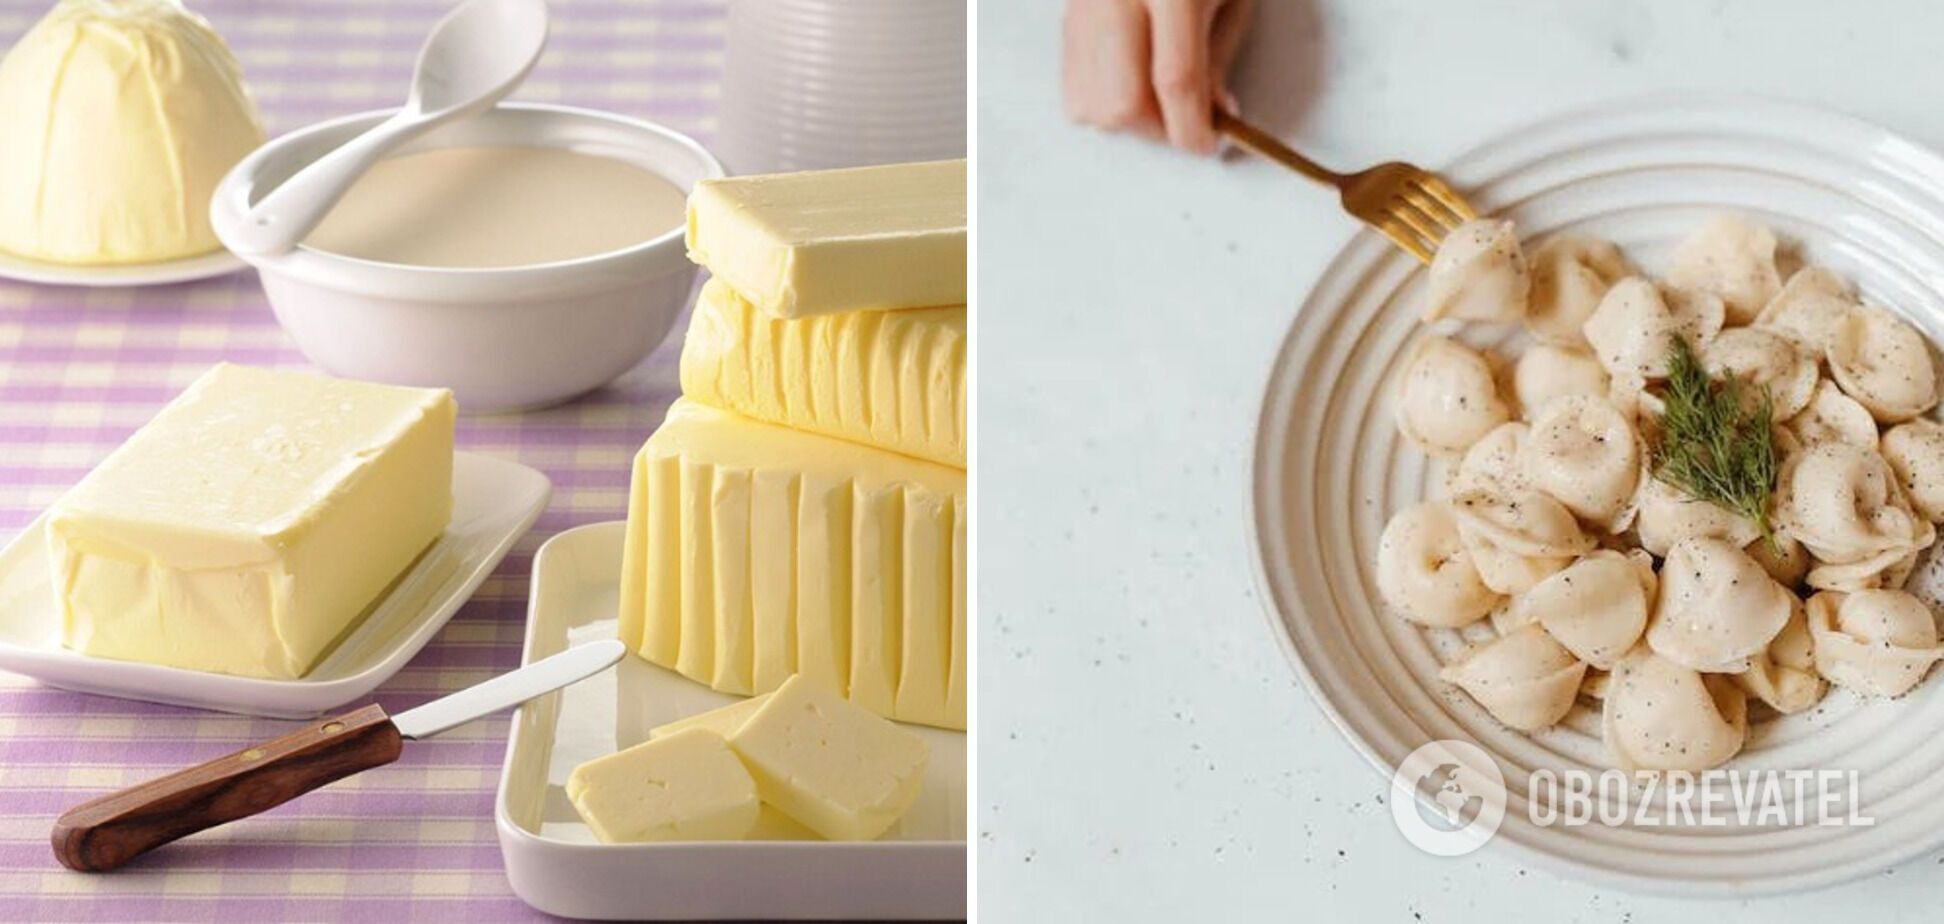 Why add butter to dumpling dough